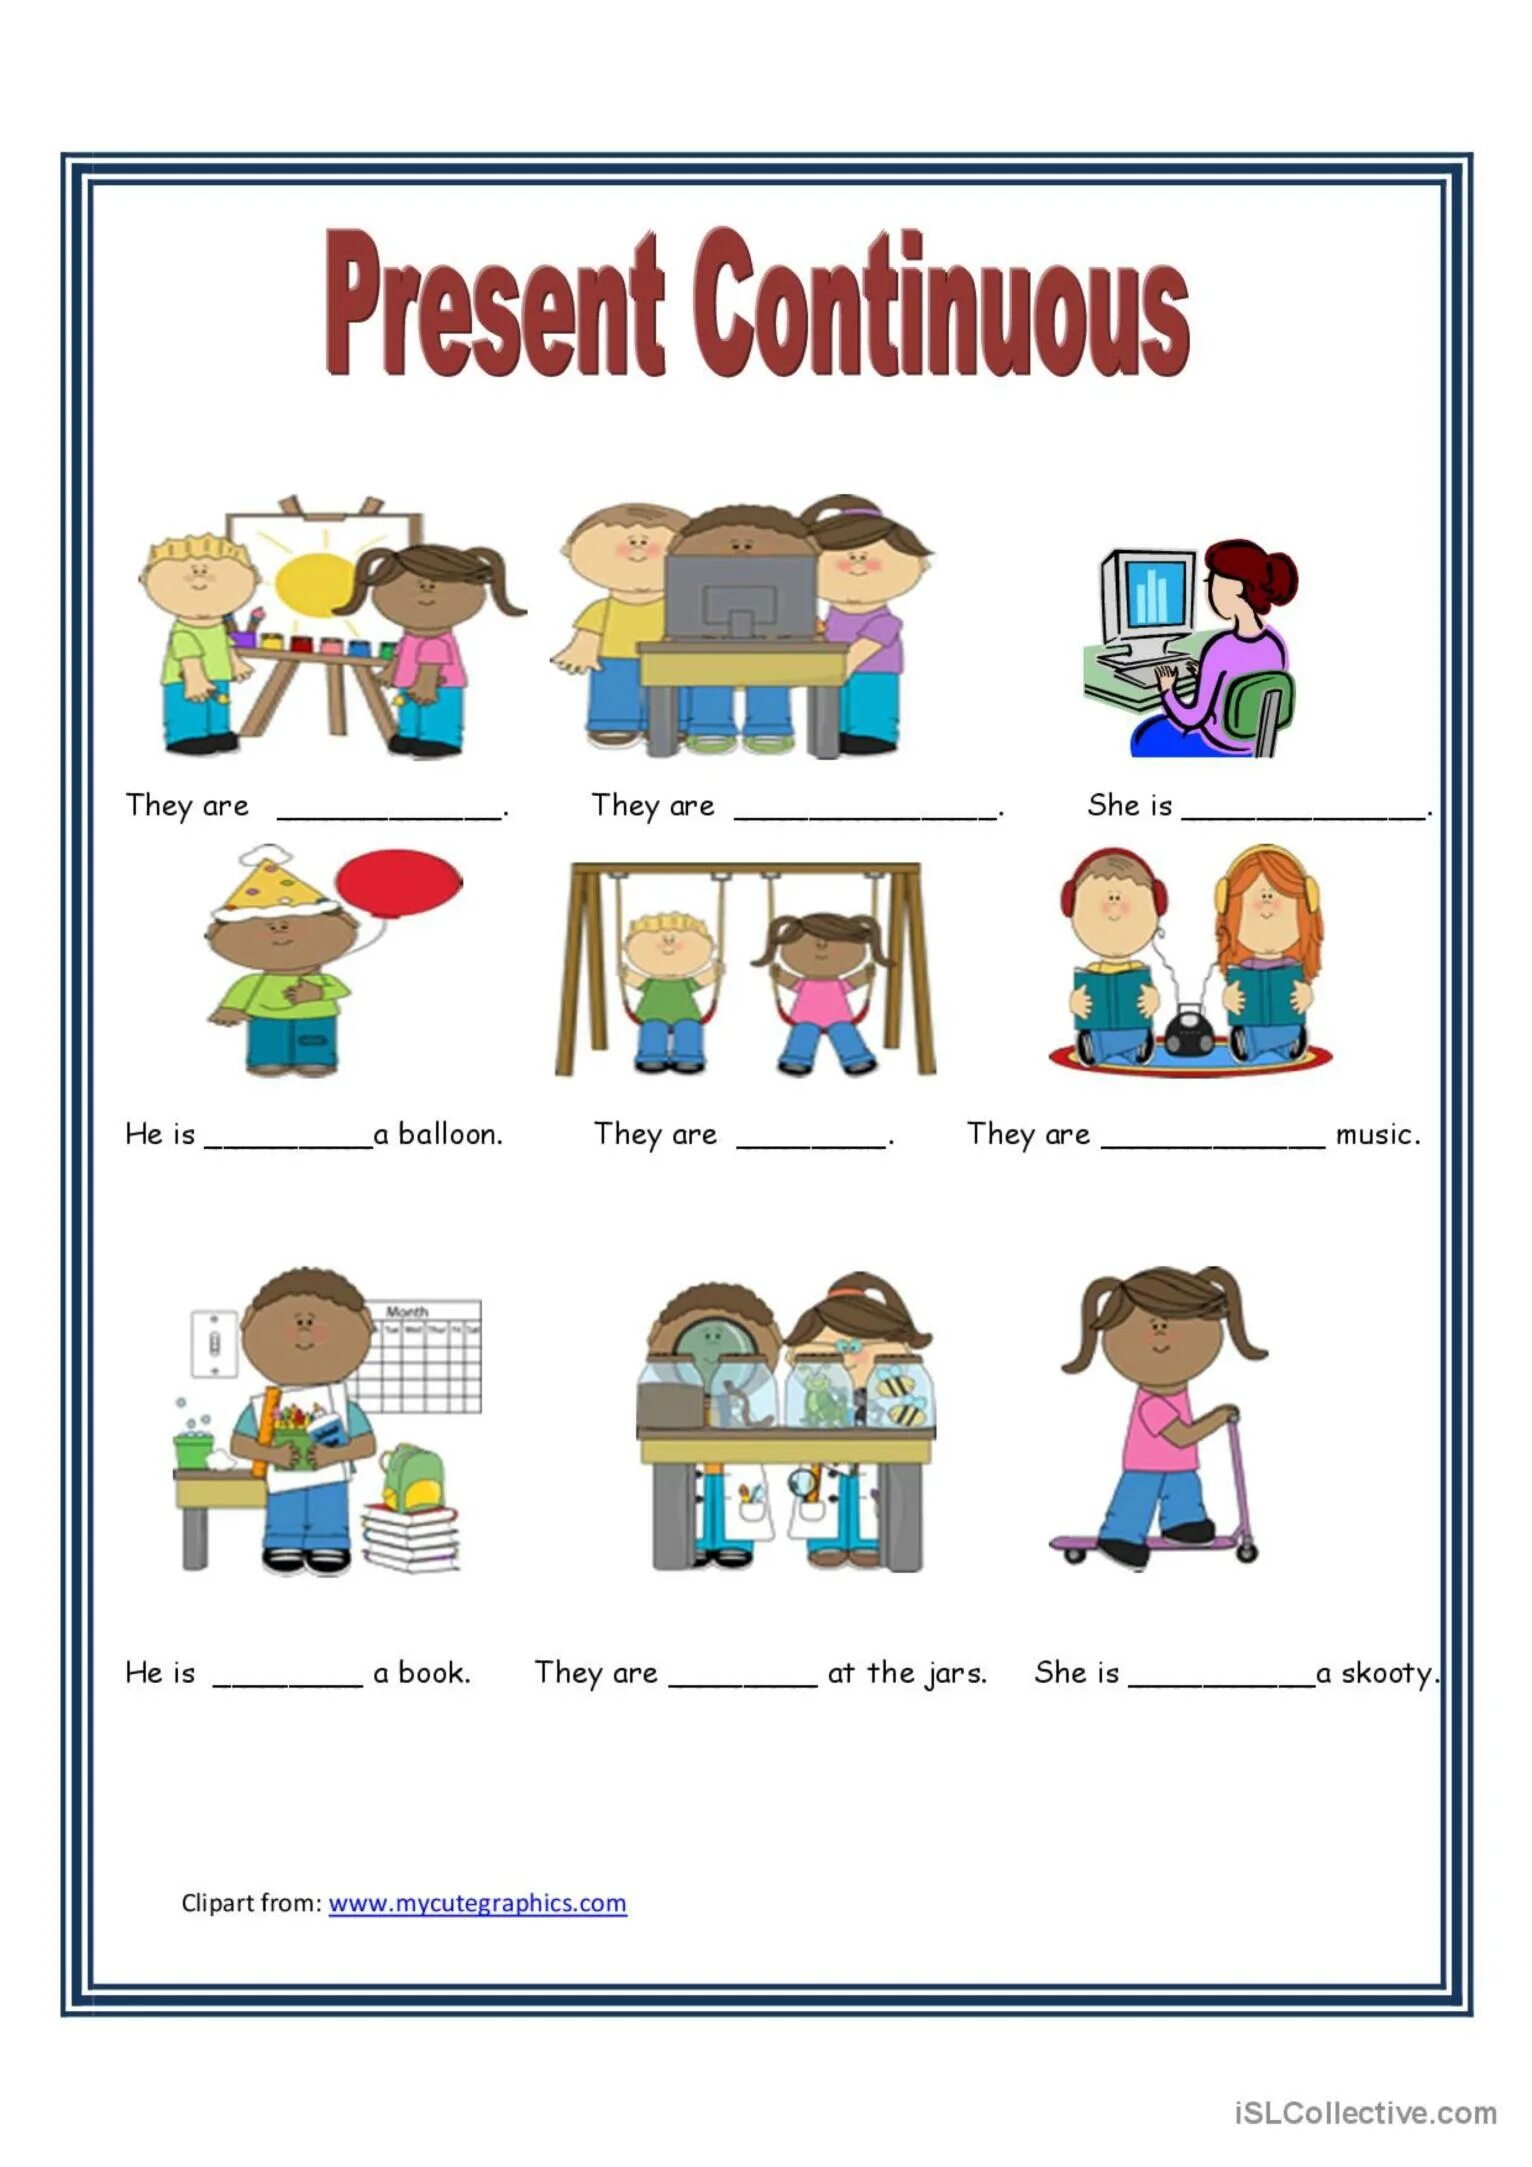 Present continuous match. Present Continuous упражнения fir Kids. Present Continuous для детей Worksheets. Рабочий лист present Continuous. Present Continuous воркшит.